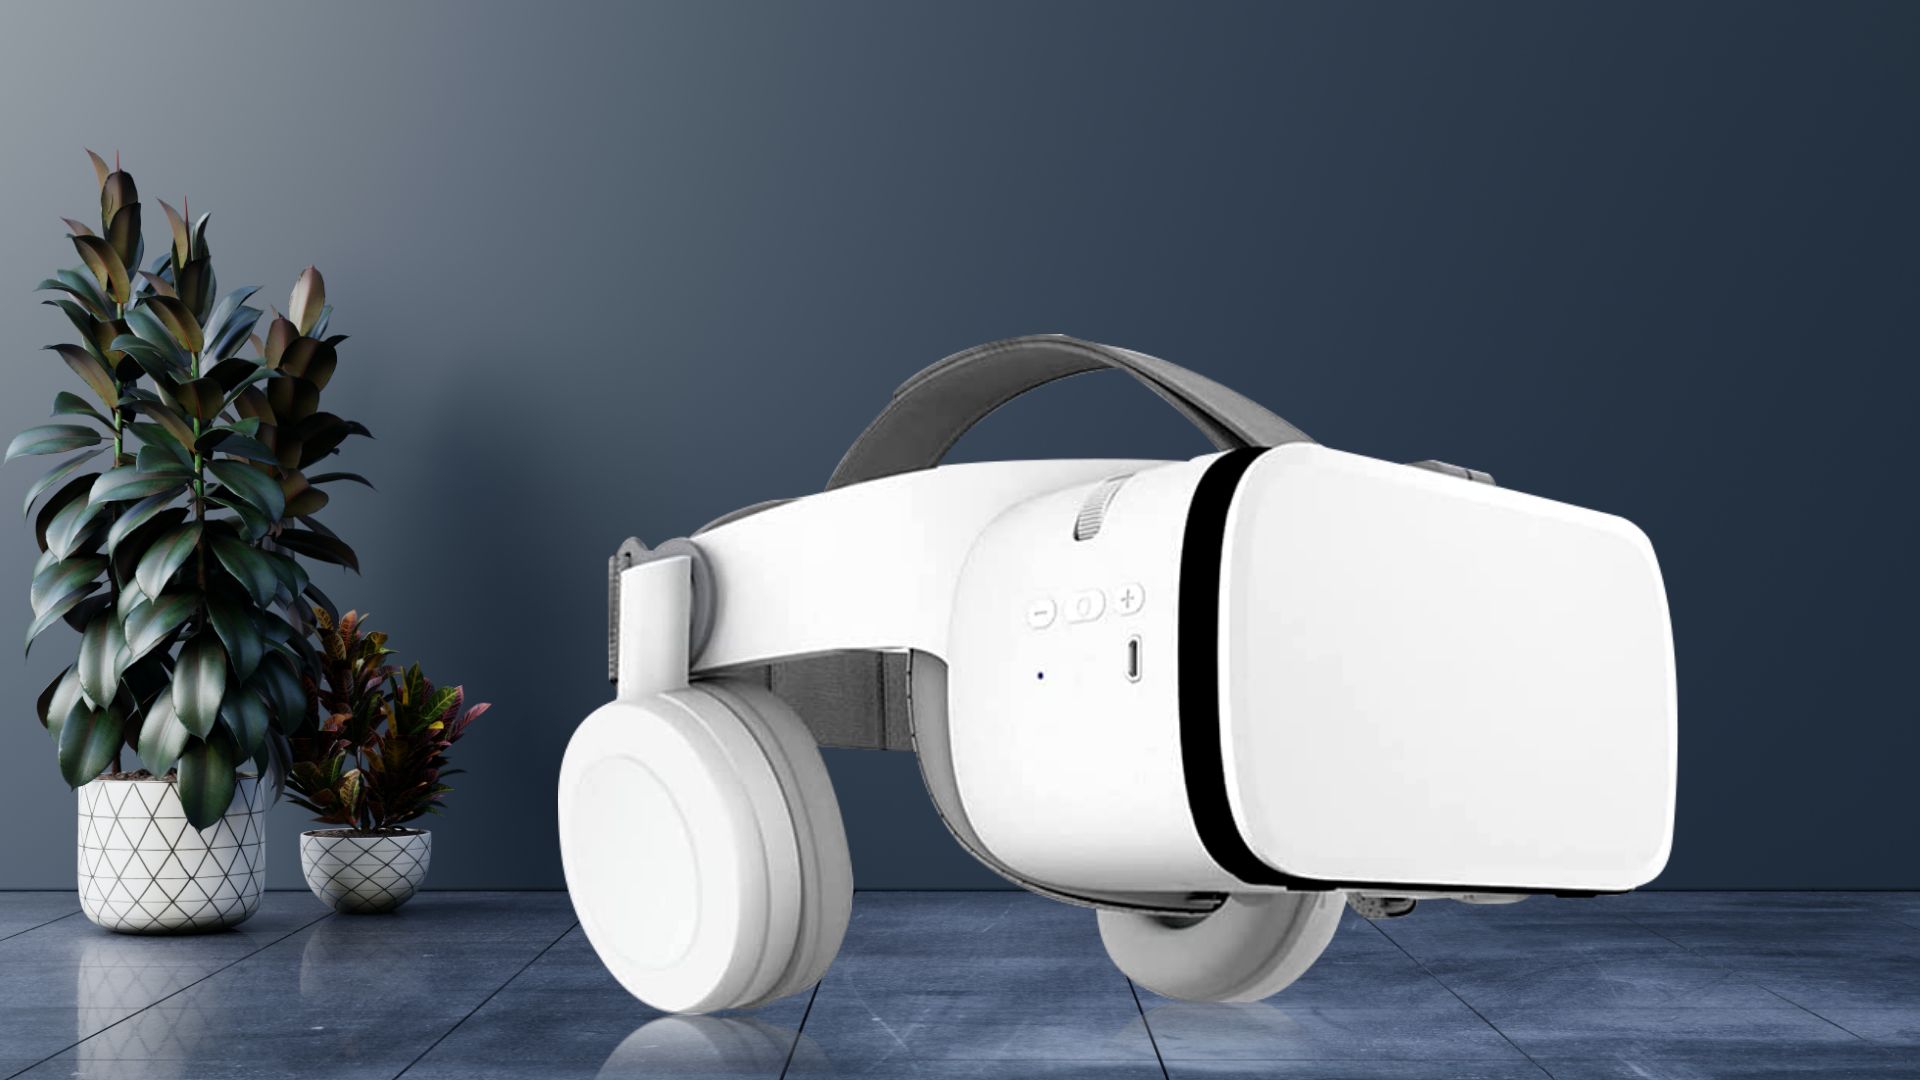 Peiloh VR Headset with Wireless Headphones